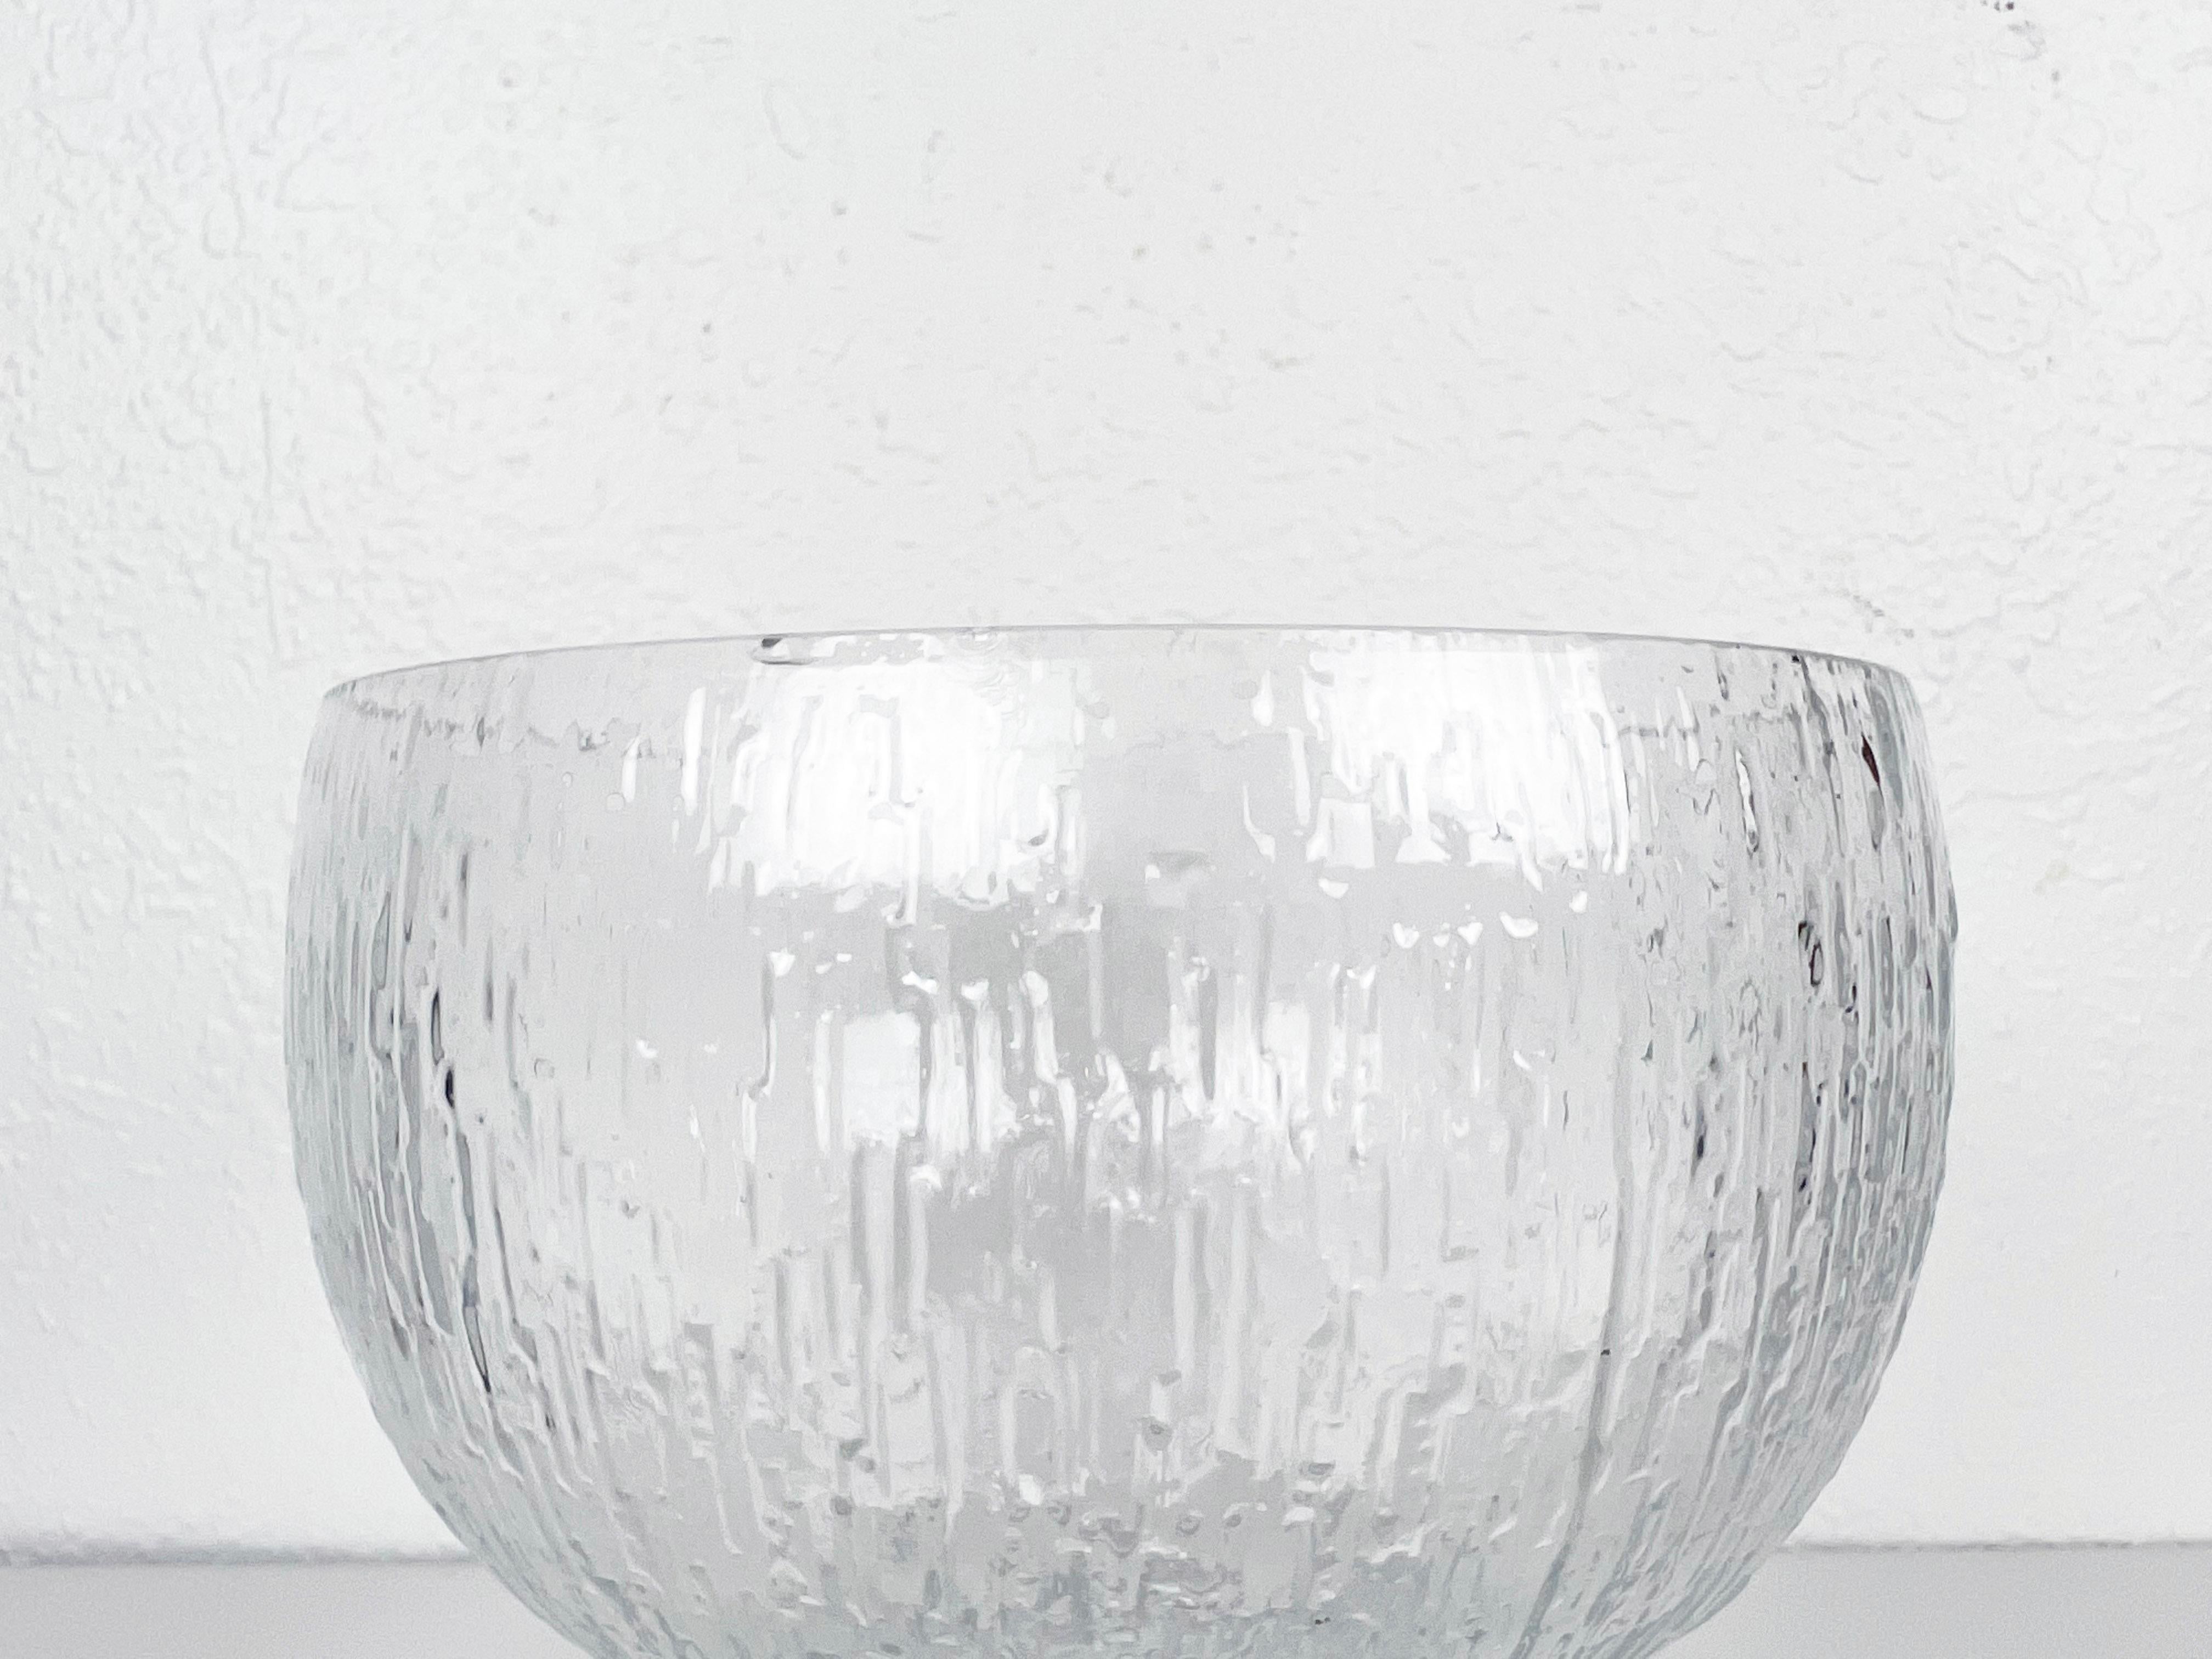 Vintage textured glass Kekkeri bowl by Timo Sarpaneva for Iittala. 

Manufacturer: Iittala

Designer: Timo Sarpaneva

Origin: Finland

Year: 1973-1986.